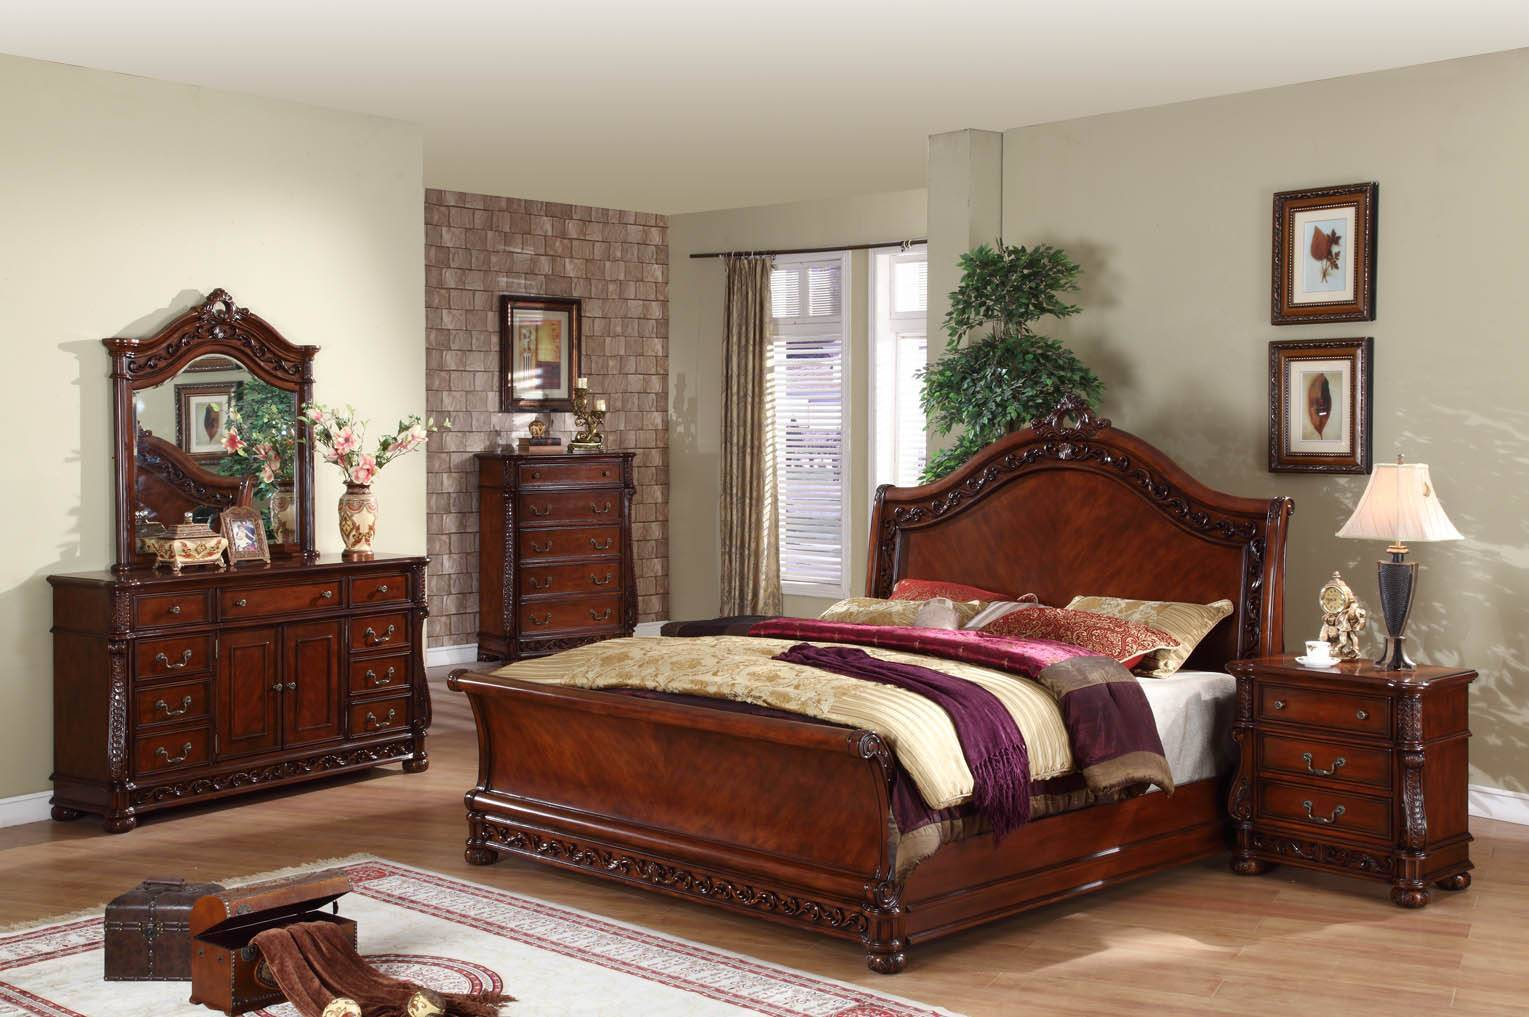 Old Fashioned Bedroom Furniture Vintage Decor regarding size 1529 X 1017